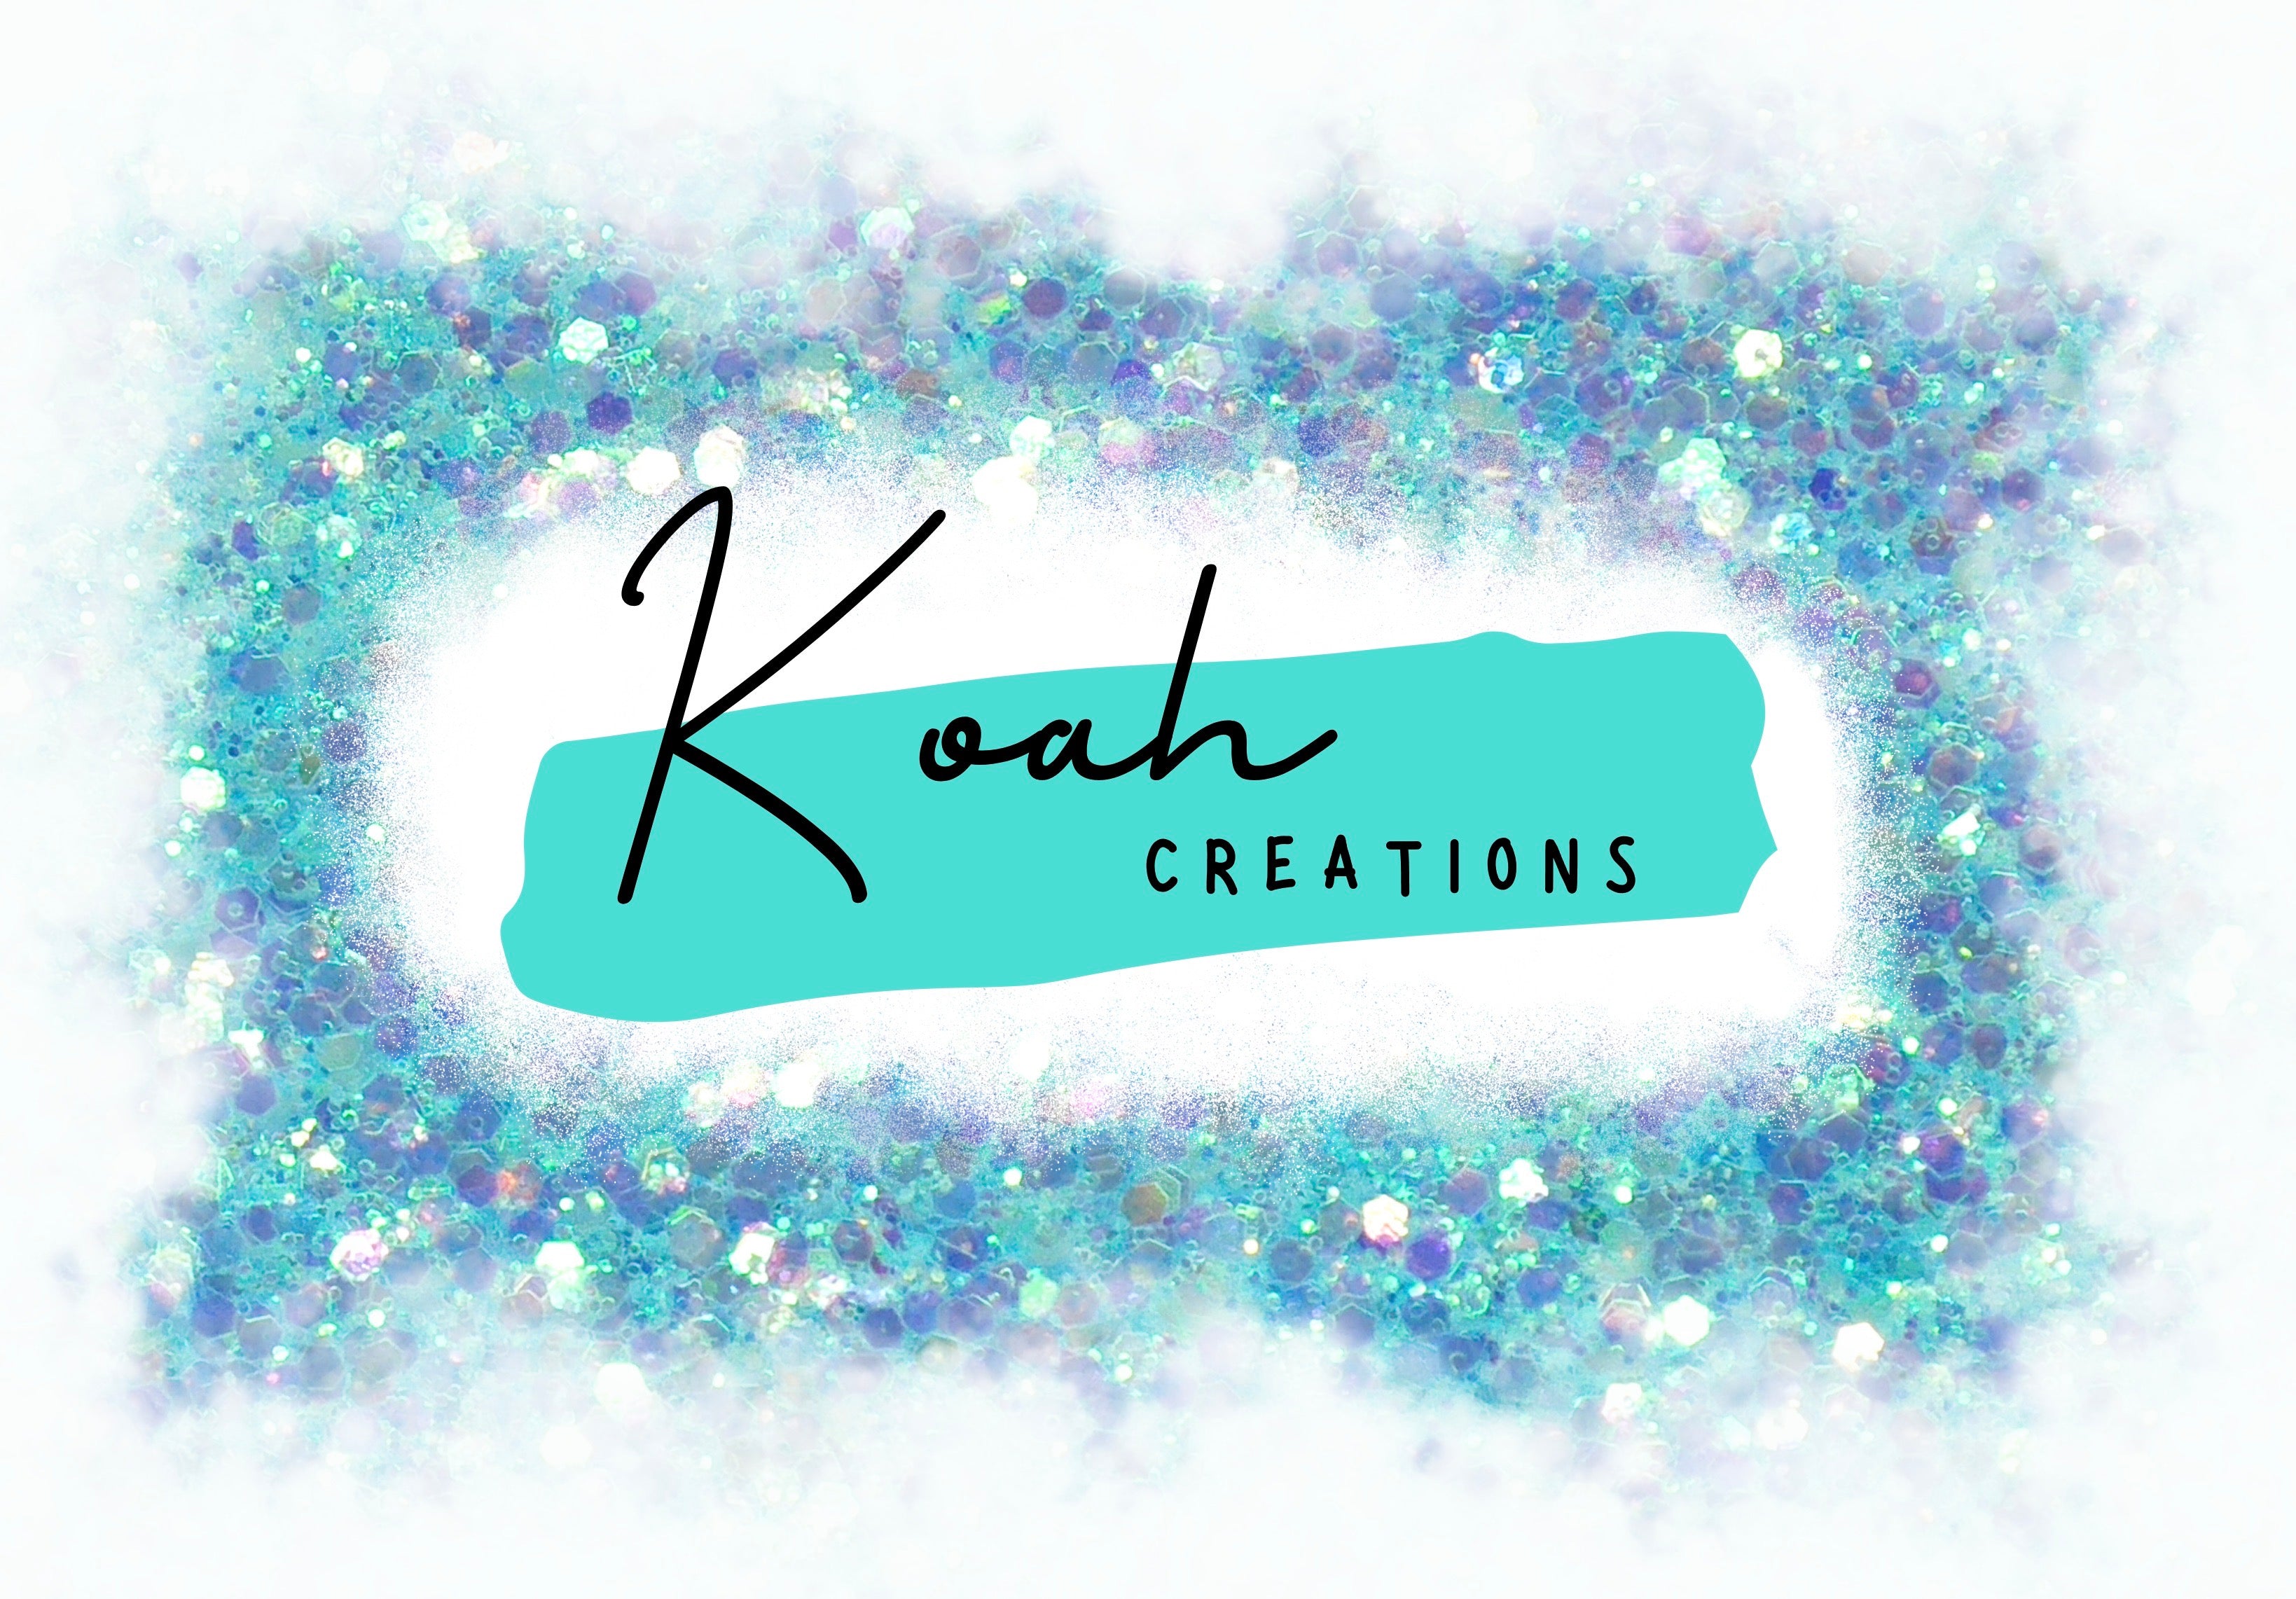 Koah Creations